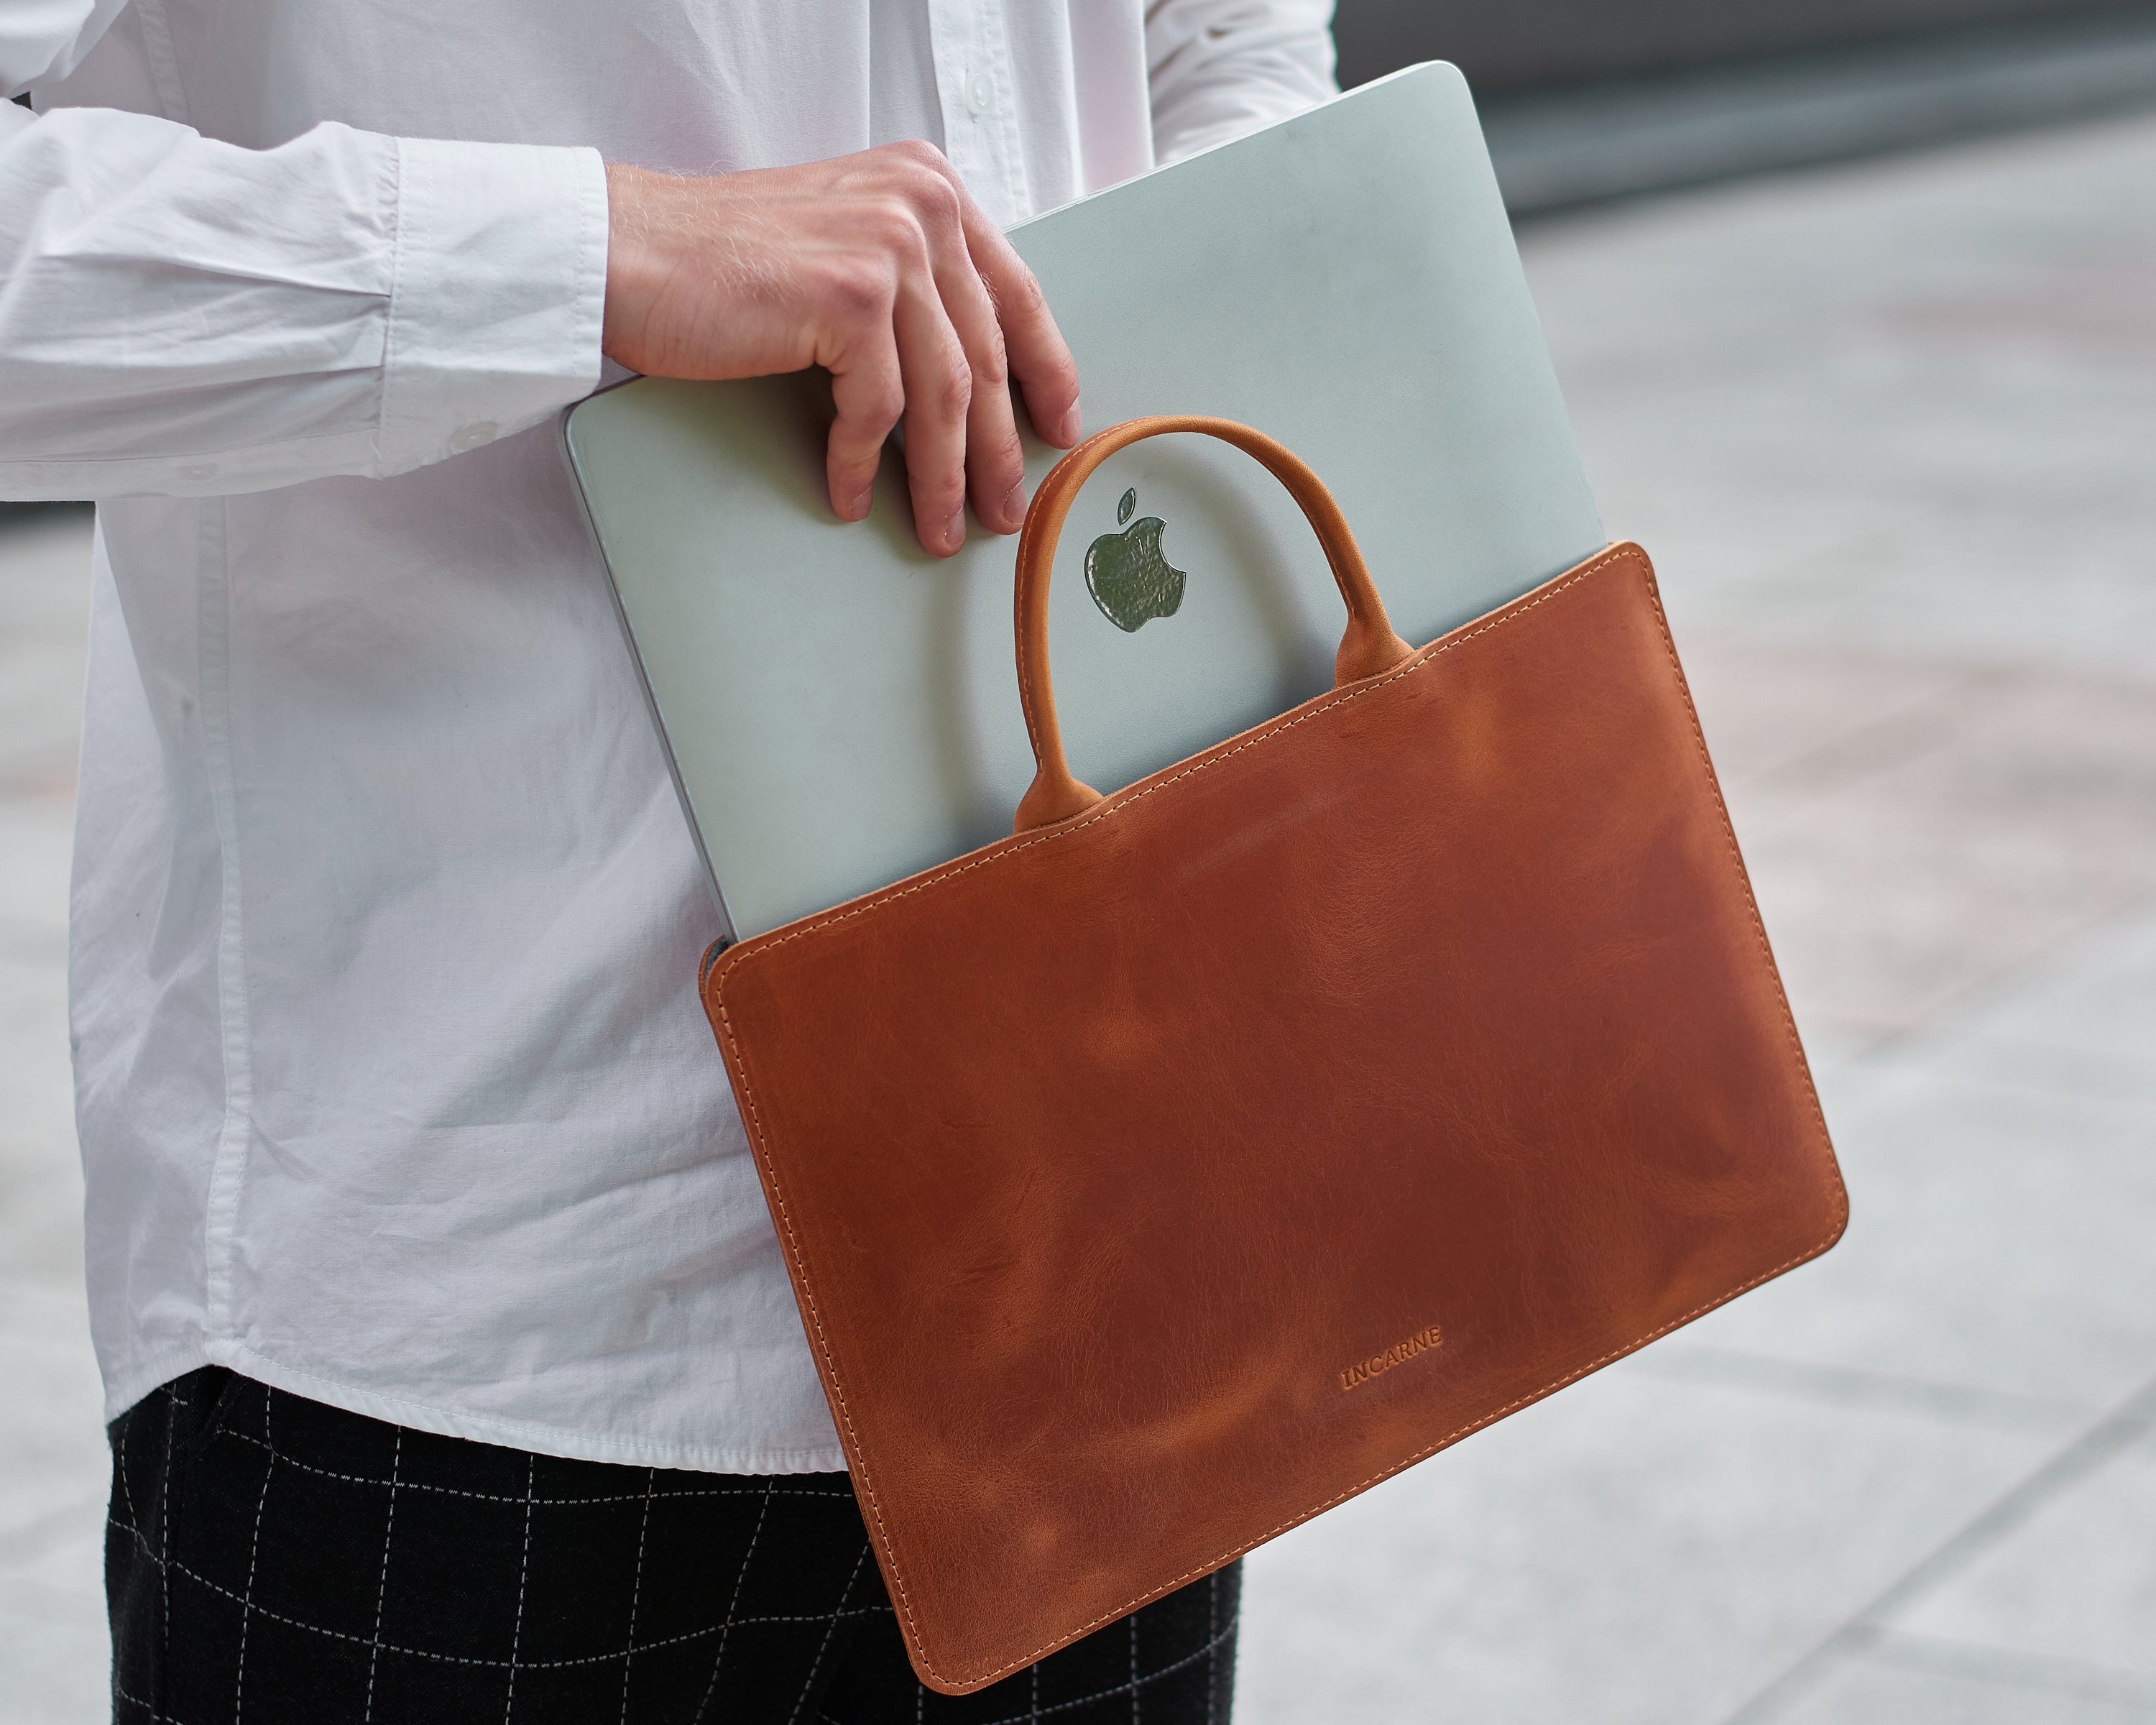  YumSur Mens Shoulder Bag, Leather Messenger Handbag Crossbody  Bag for Men Purse iPad Bag for Business Office Work School with Adjustable  Strap Black : Clothing, Shoes & Jewelry